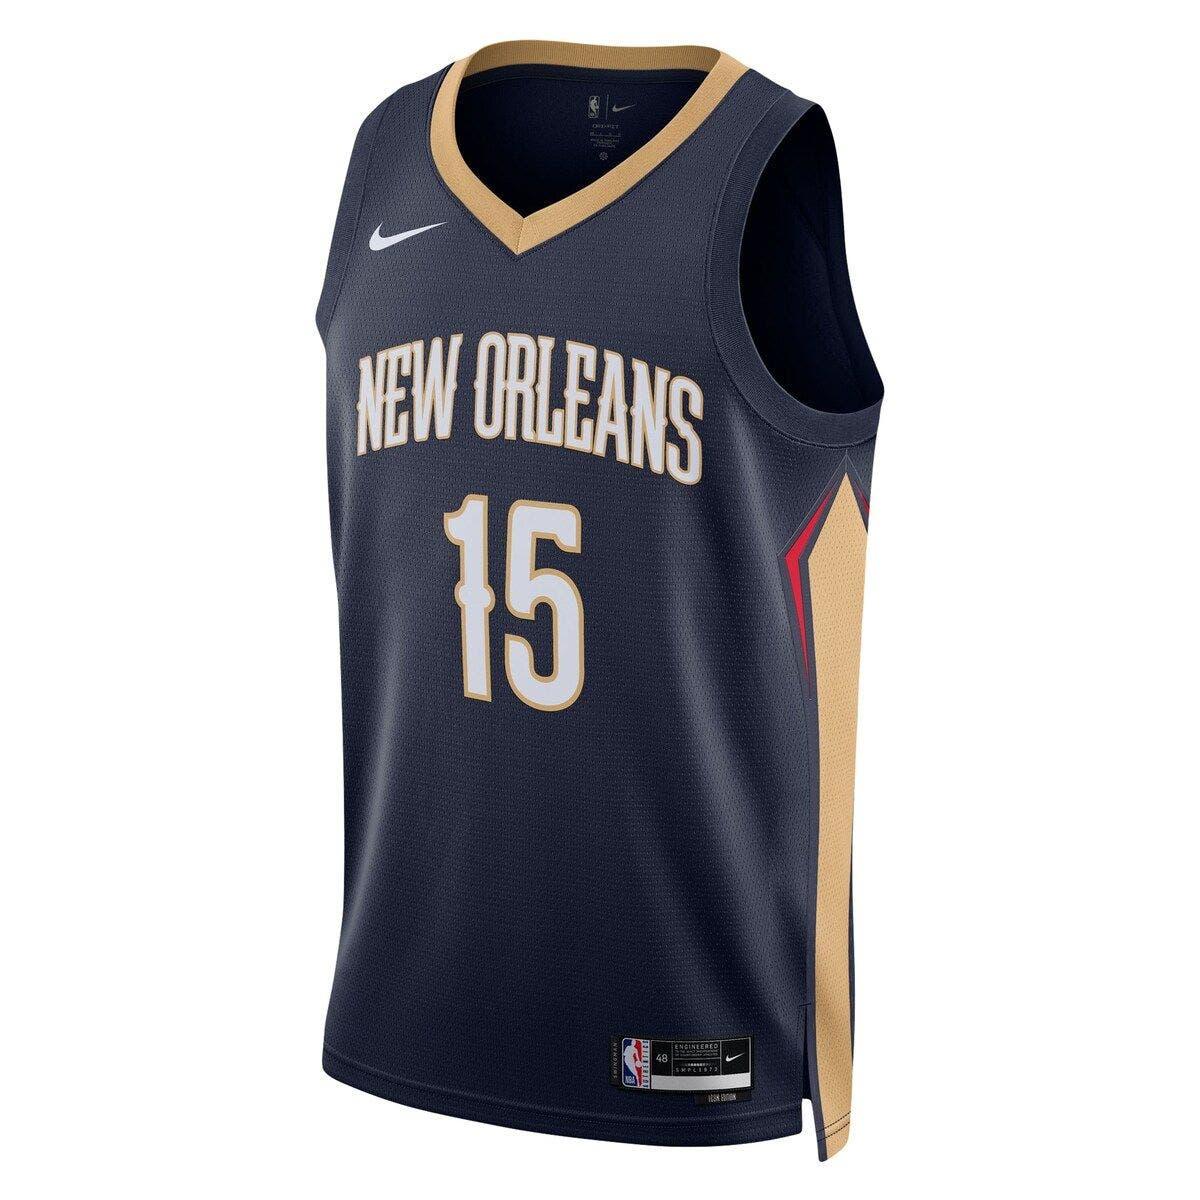 New Orleans Pelicans City Edition Men's Nike NBA Logo T-Shirt.